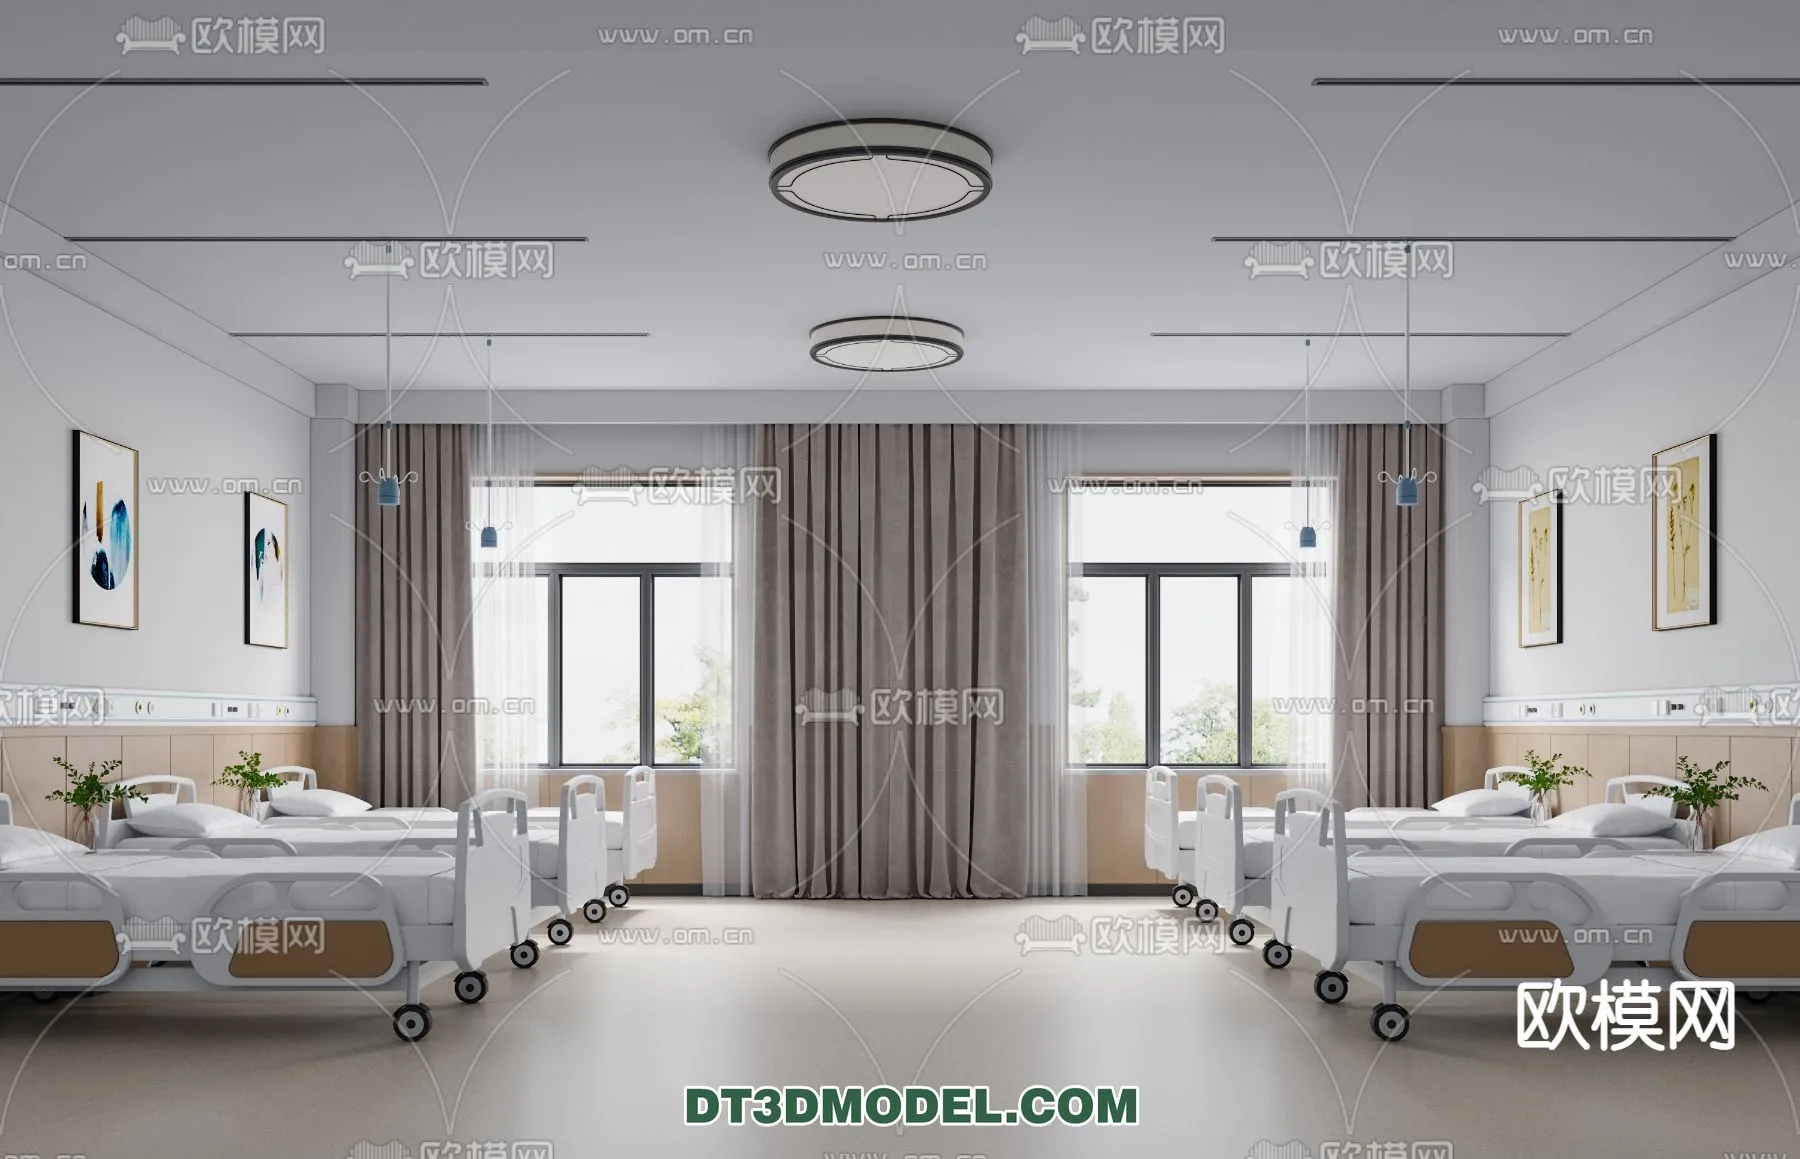 HOSPITAL 3D SCENES – MODERN – 0090